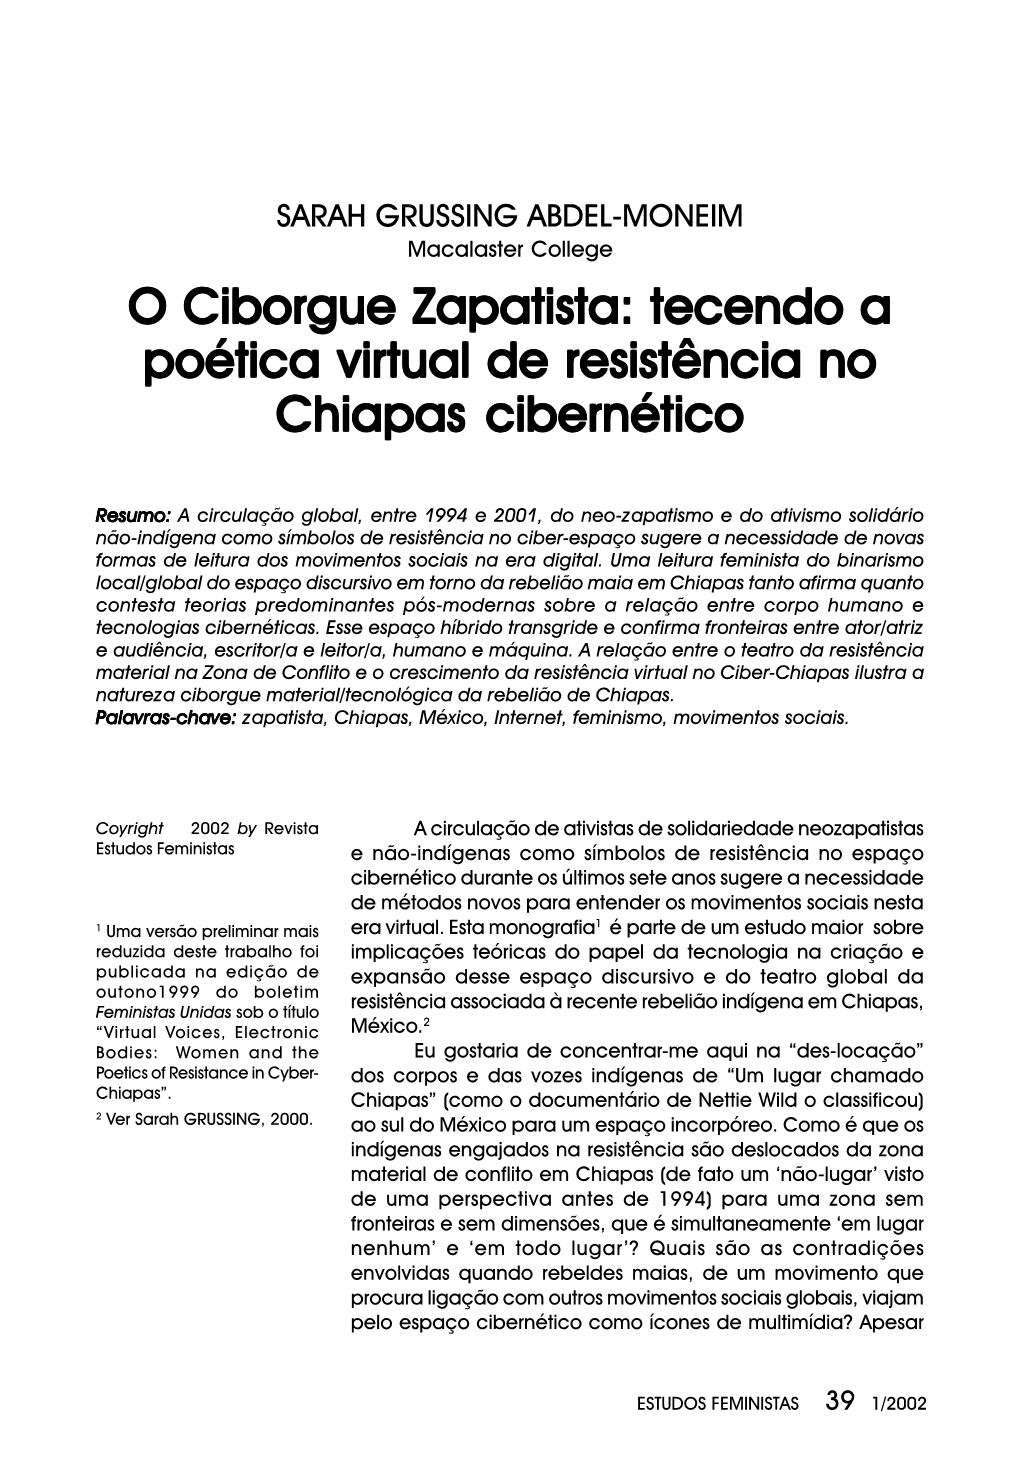 O Ciborgue Zapatista: Tecendo a Poética Virtual De Resistência No Chiapas Cibernético